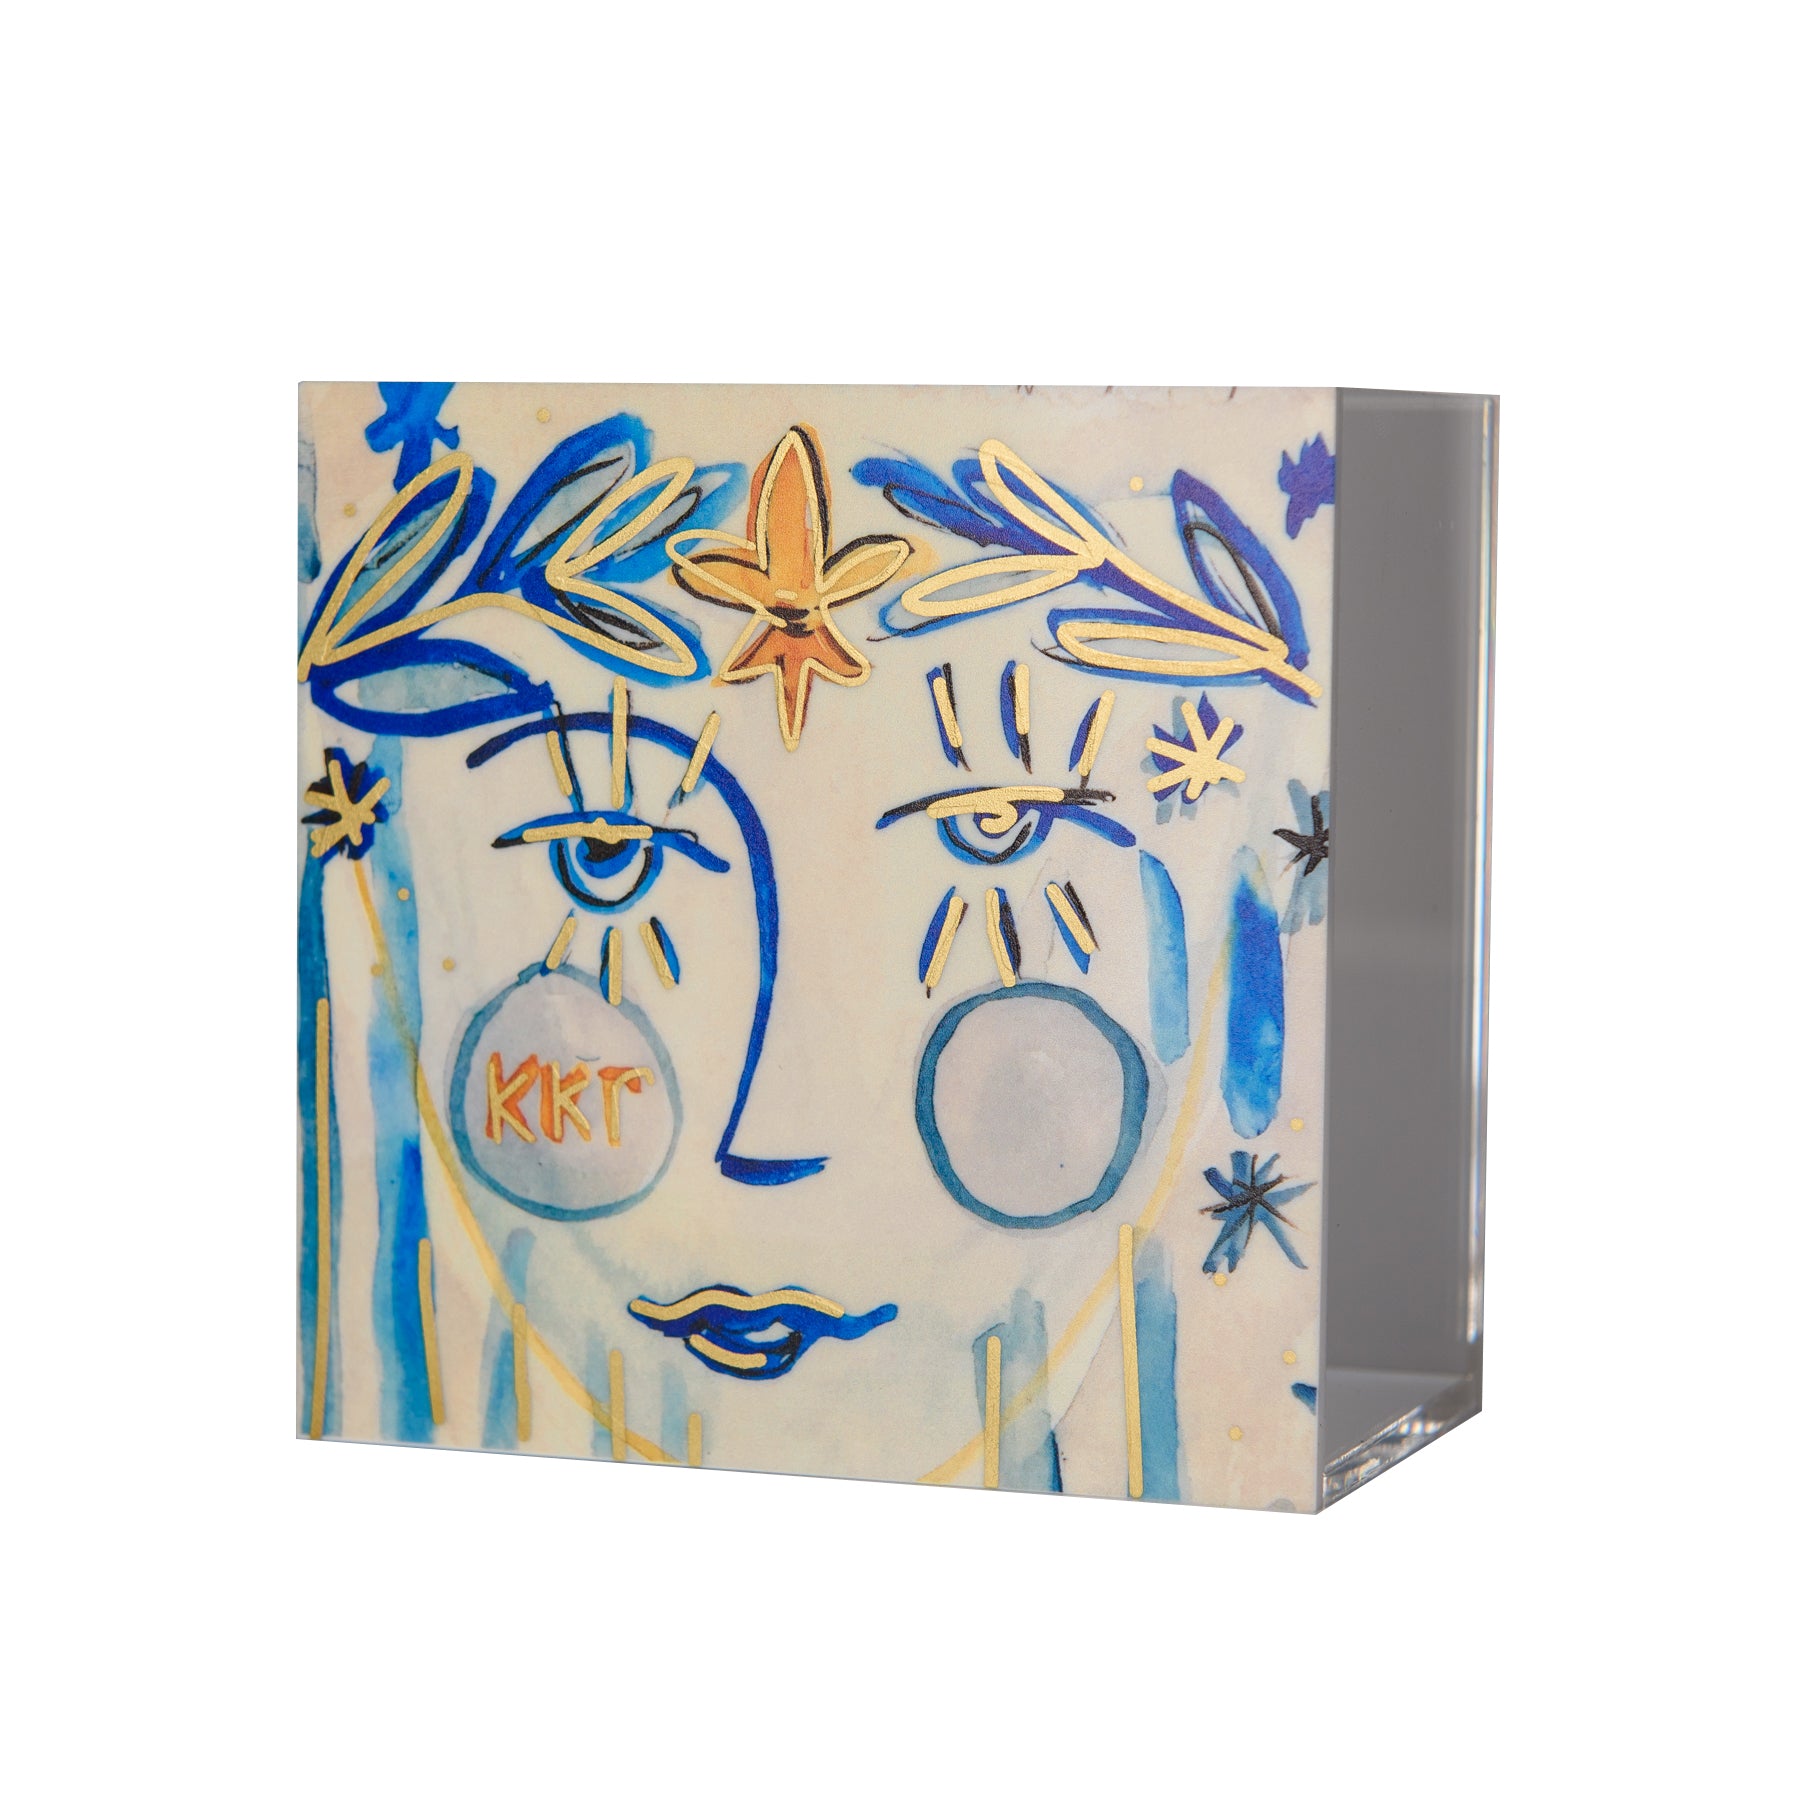 Kappa Kappa Gamma Sister Acrylic Box 4"x4"